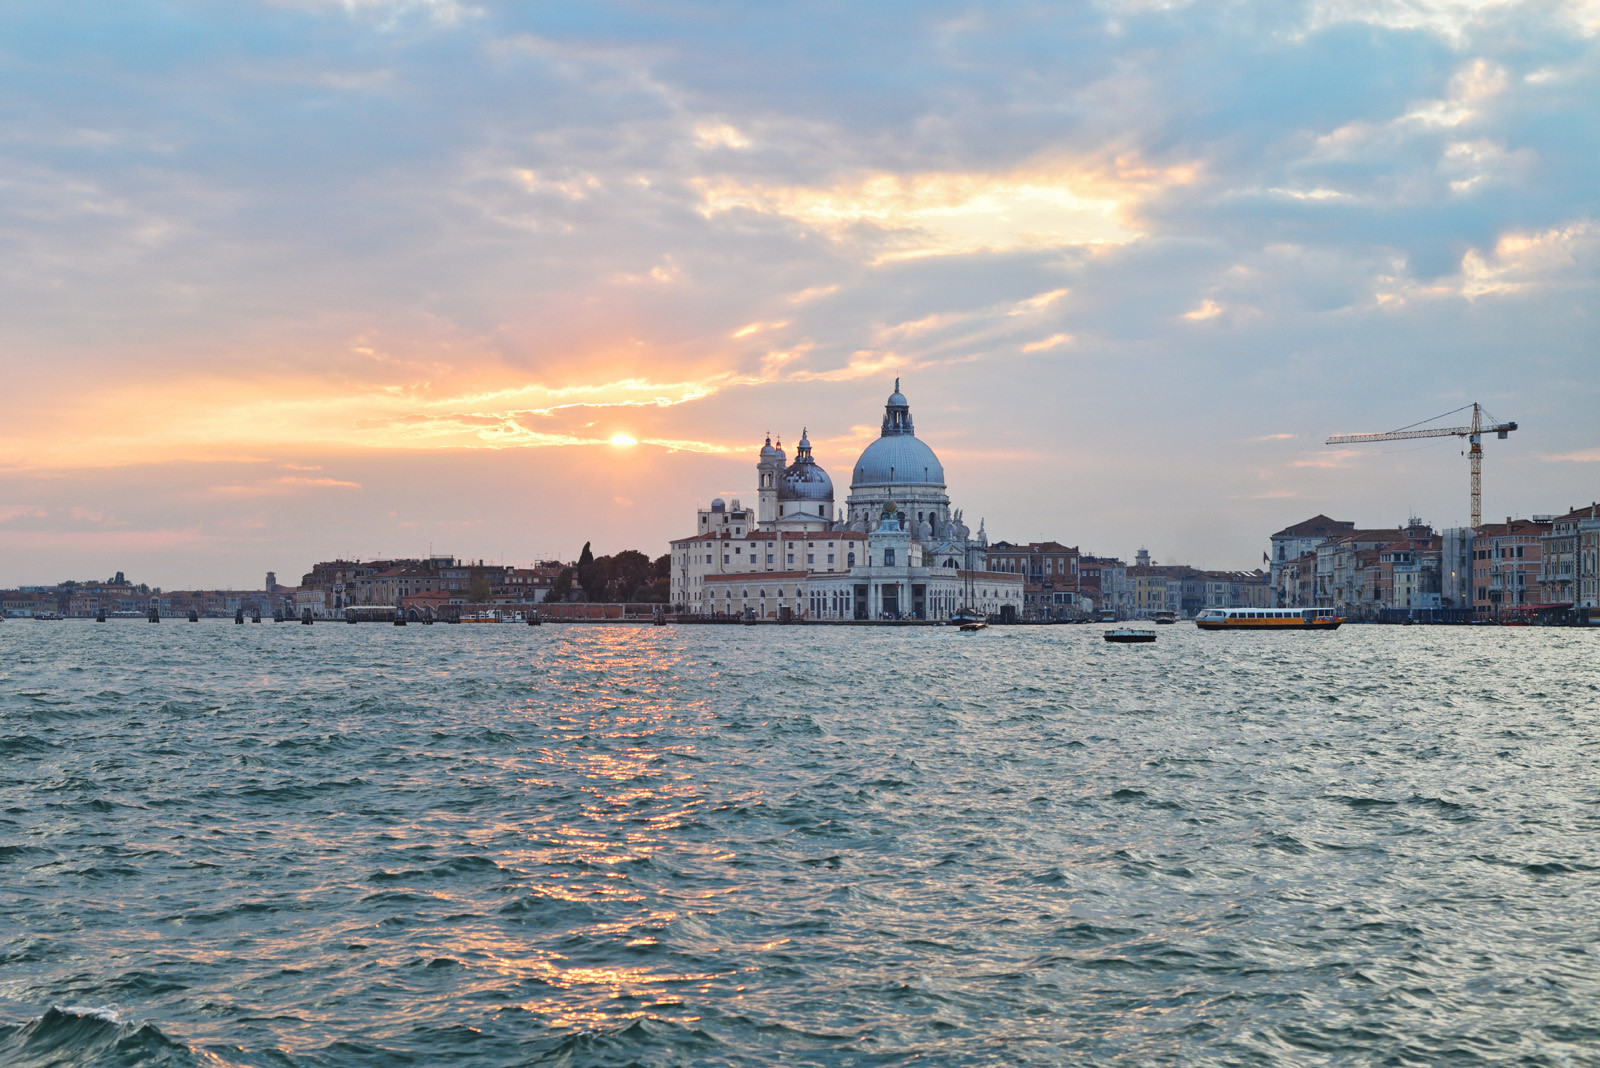 Nearly sunset, Punta della Dogana and Basilica di Santa Maria della Salute seen from on the water of St Marks Basin, Venice